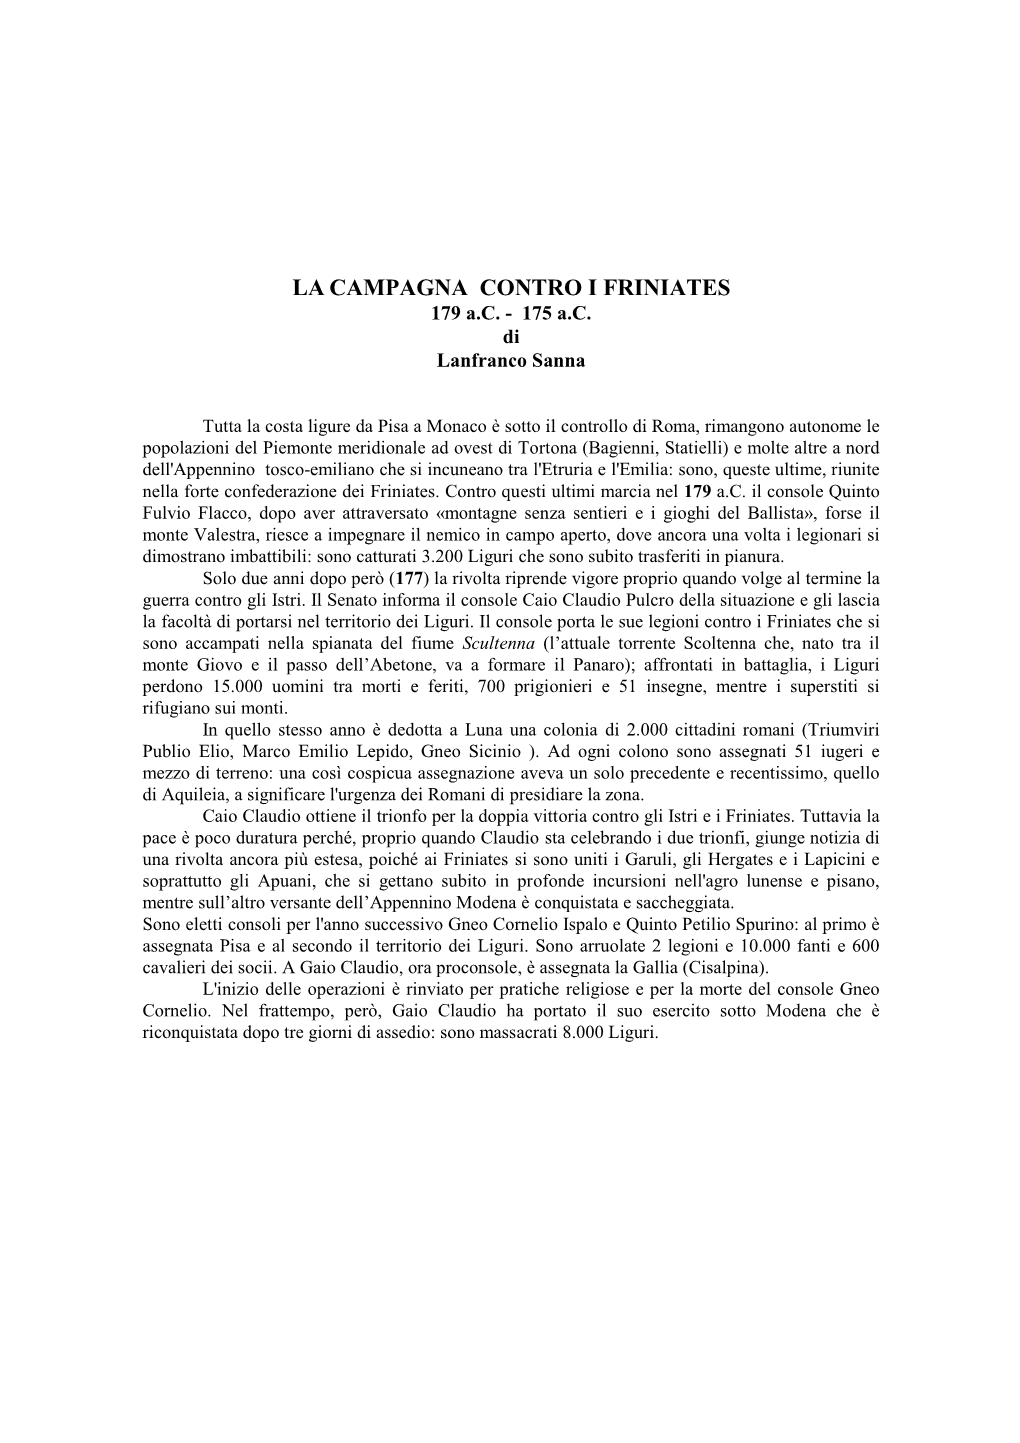 LA CAMPAGNA CONTRO I FRINIATES 179 A.C